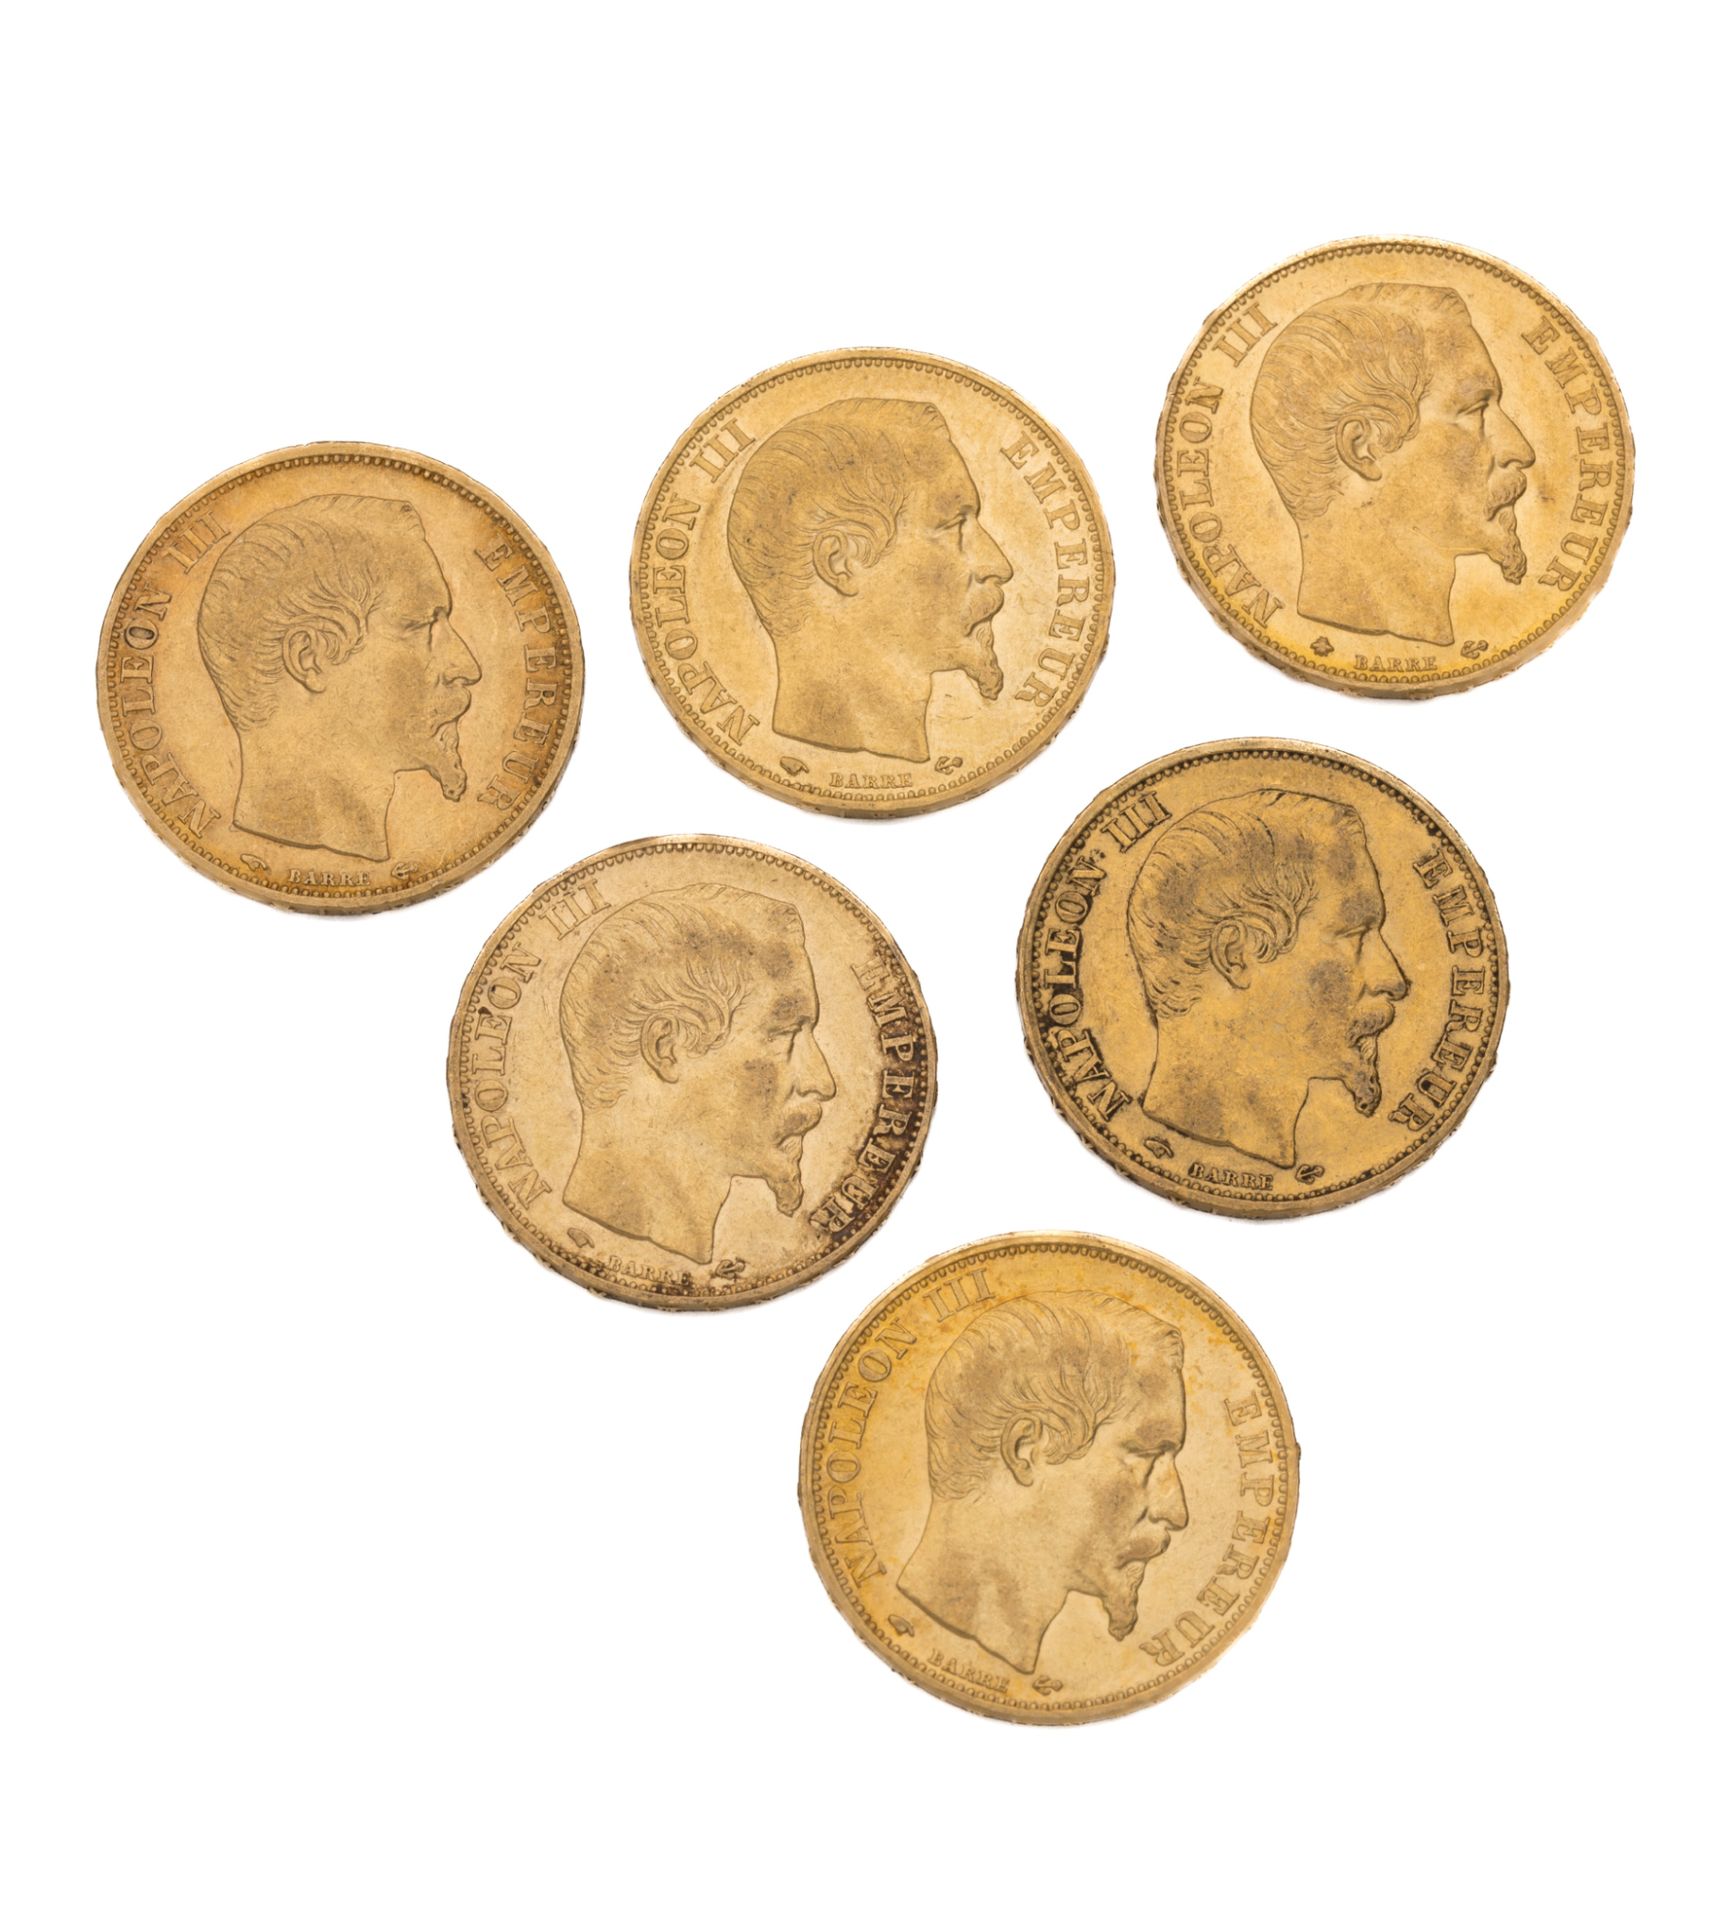 Null SECOND EMPIRE
20 francs gold Naopelon III, bare head. 6 copies. 1860 (Paris&hellip;